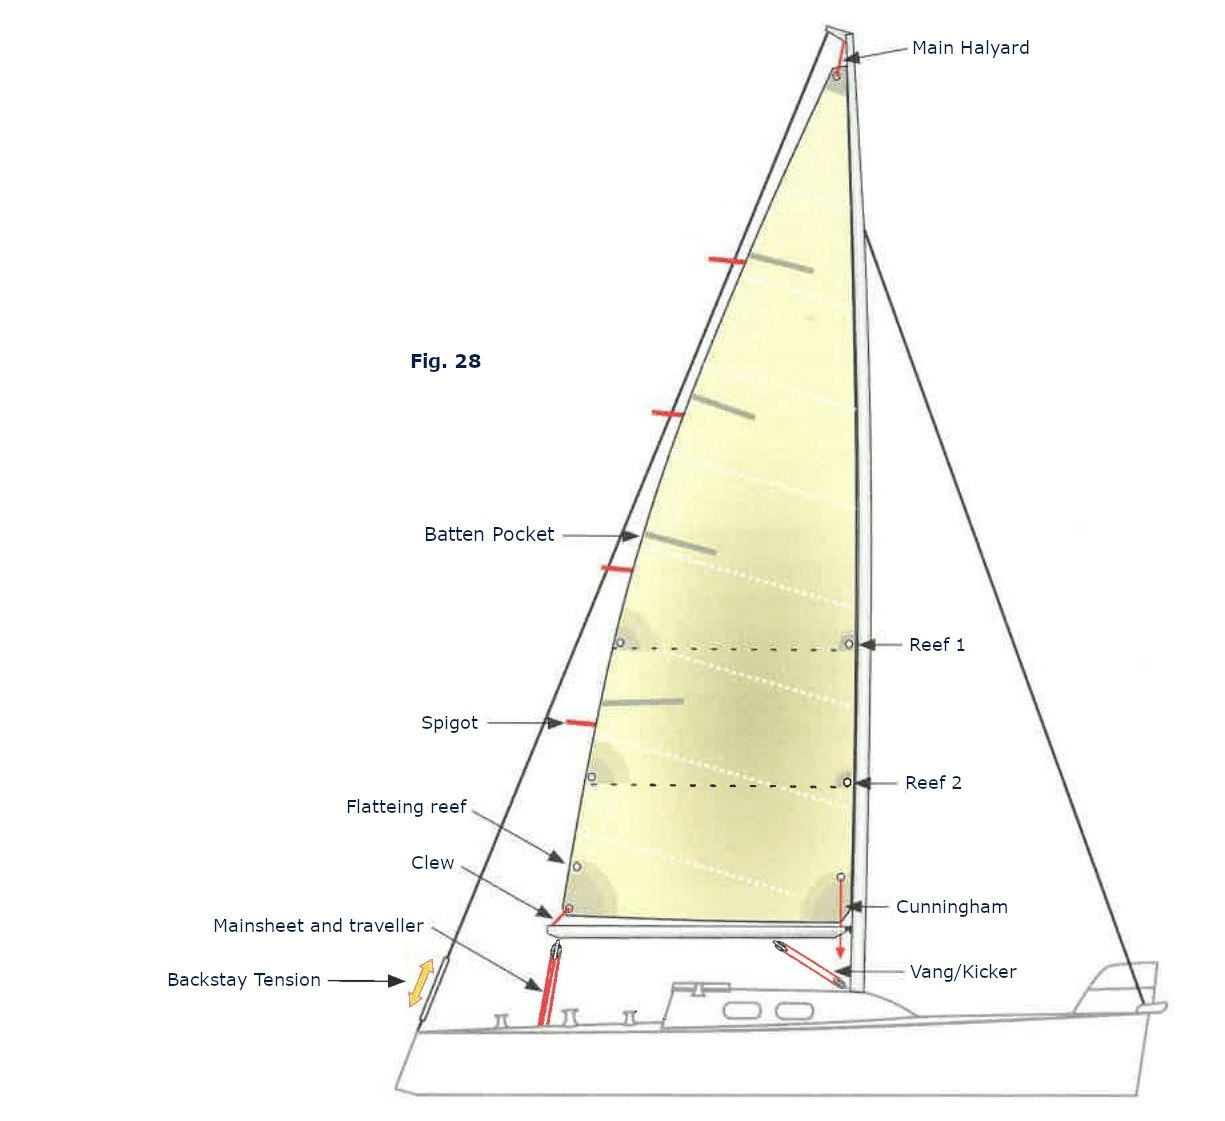 drawing of mainsail controls on a sailboat, Gibson, Rob, Sail trimming, 2020, ISBN 987-80-87383-18-6, page 28, fig. 28